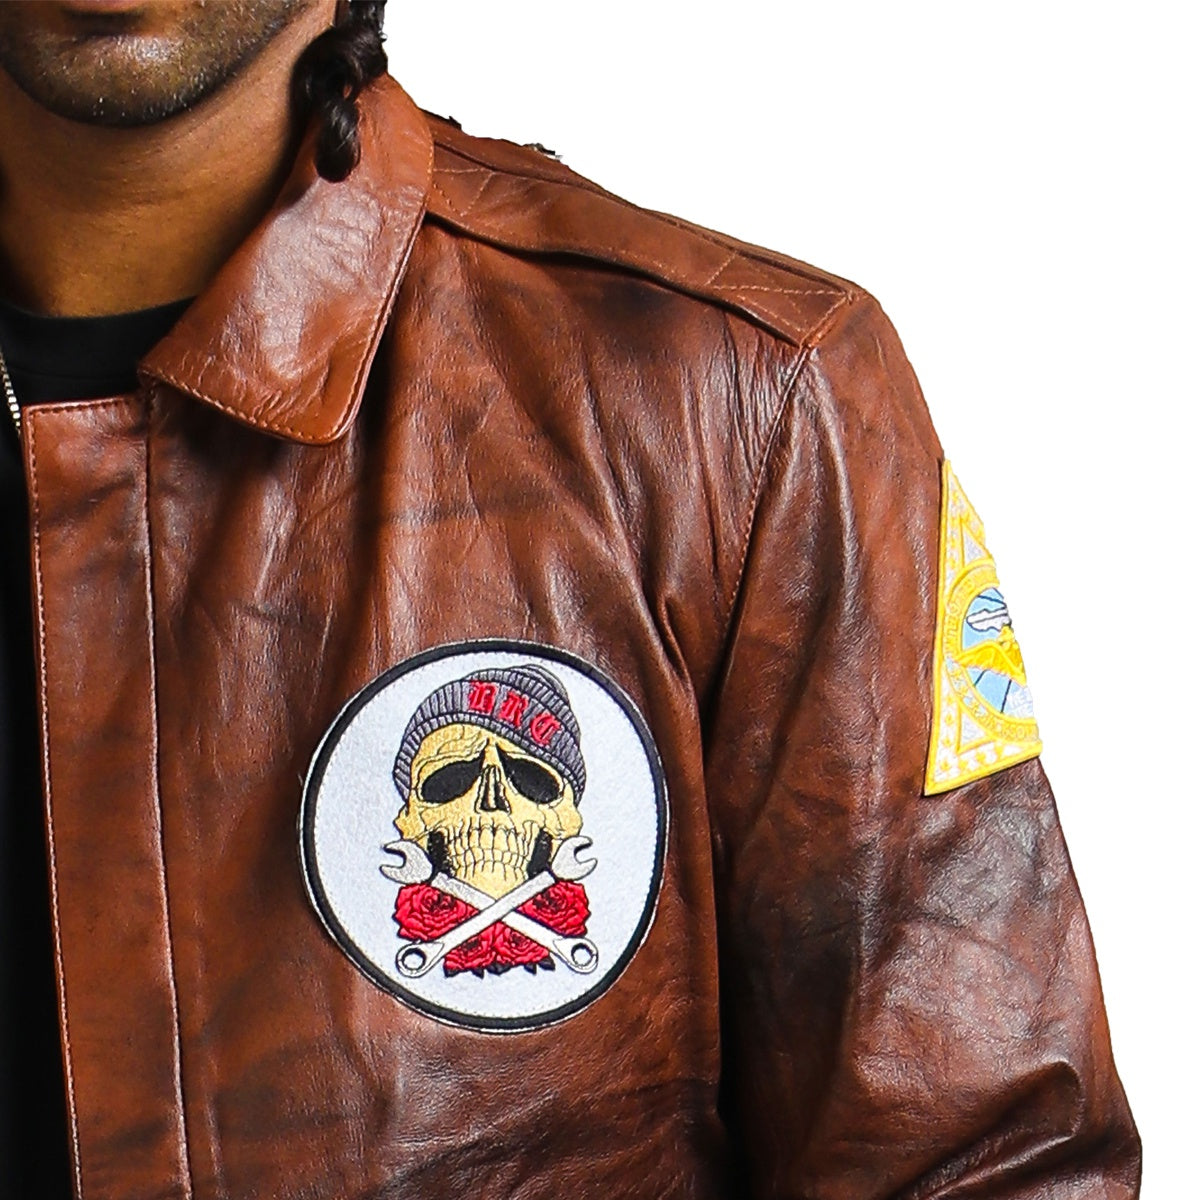 Brown Bomber Leather Jacket for Men